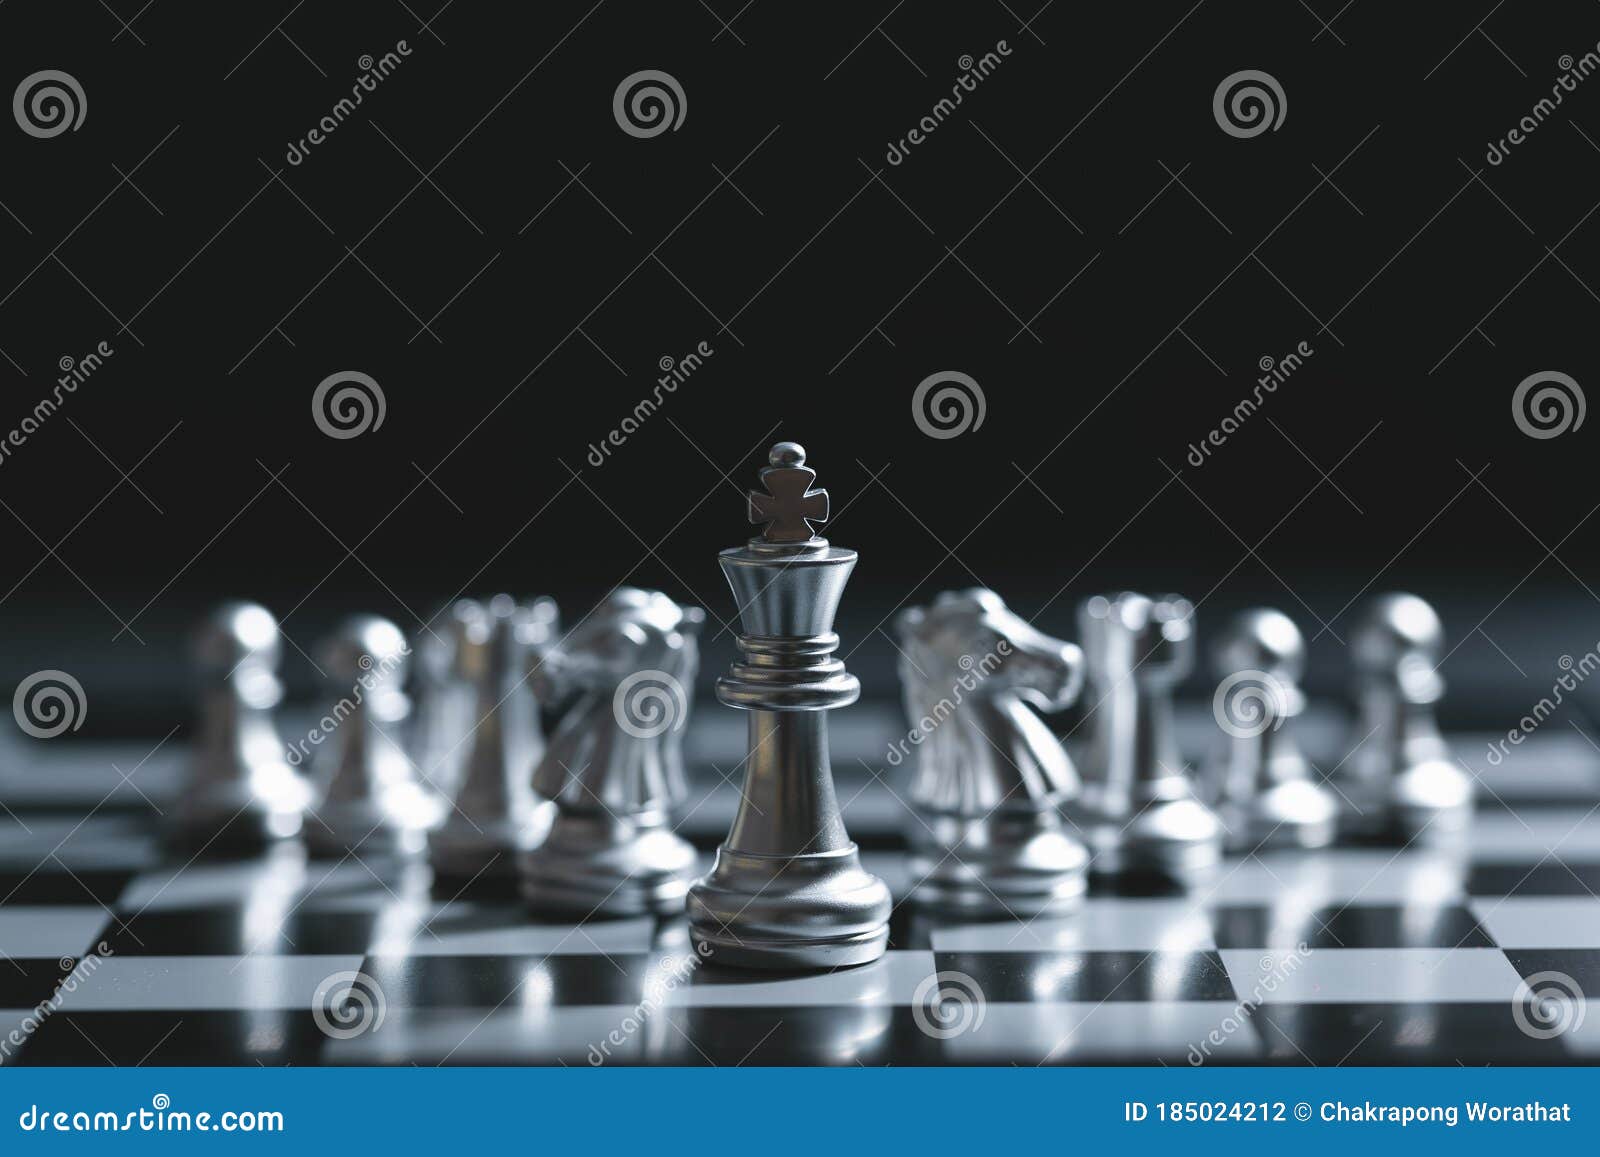 Conjunto de peças de xadrez, jogo de tabuleiro de xadrez, isolado